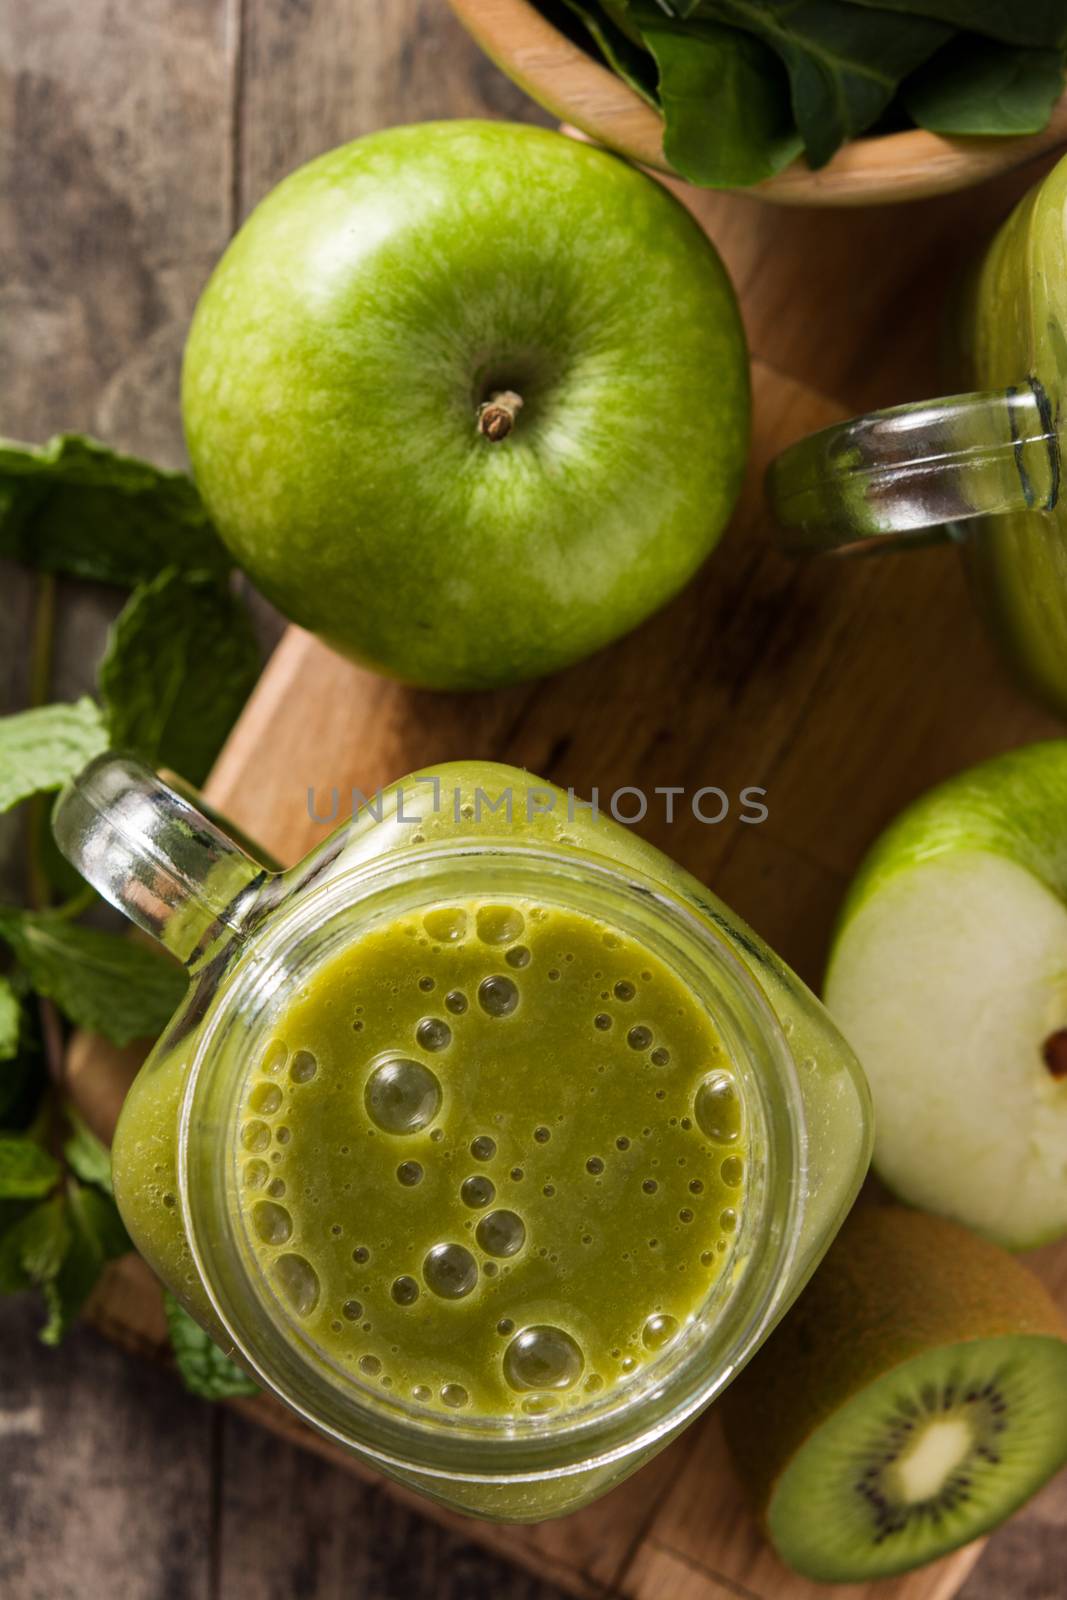 Healthy green smoothie in jar  by chandlervid85